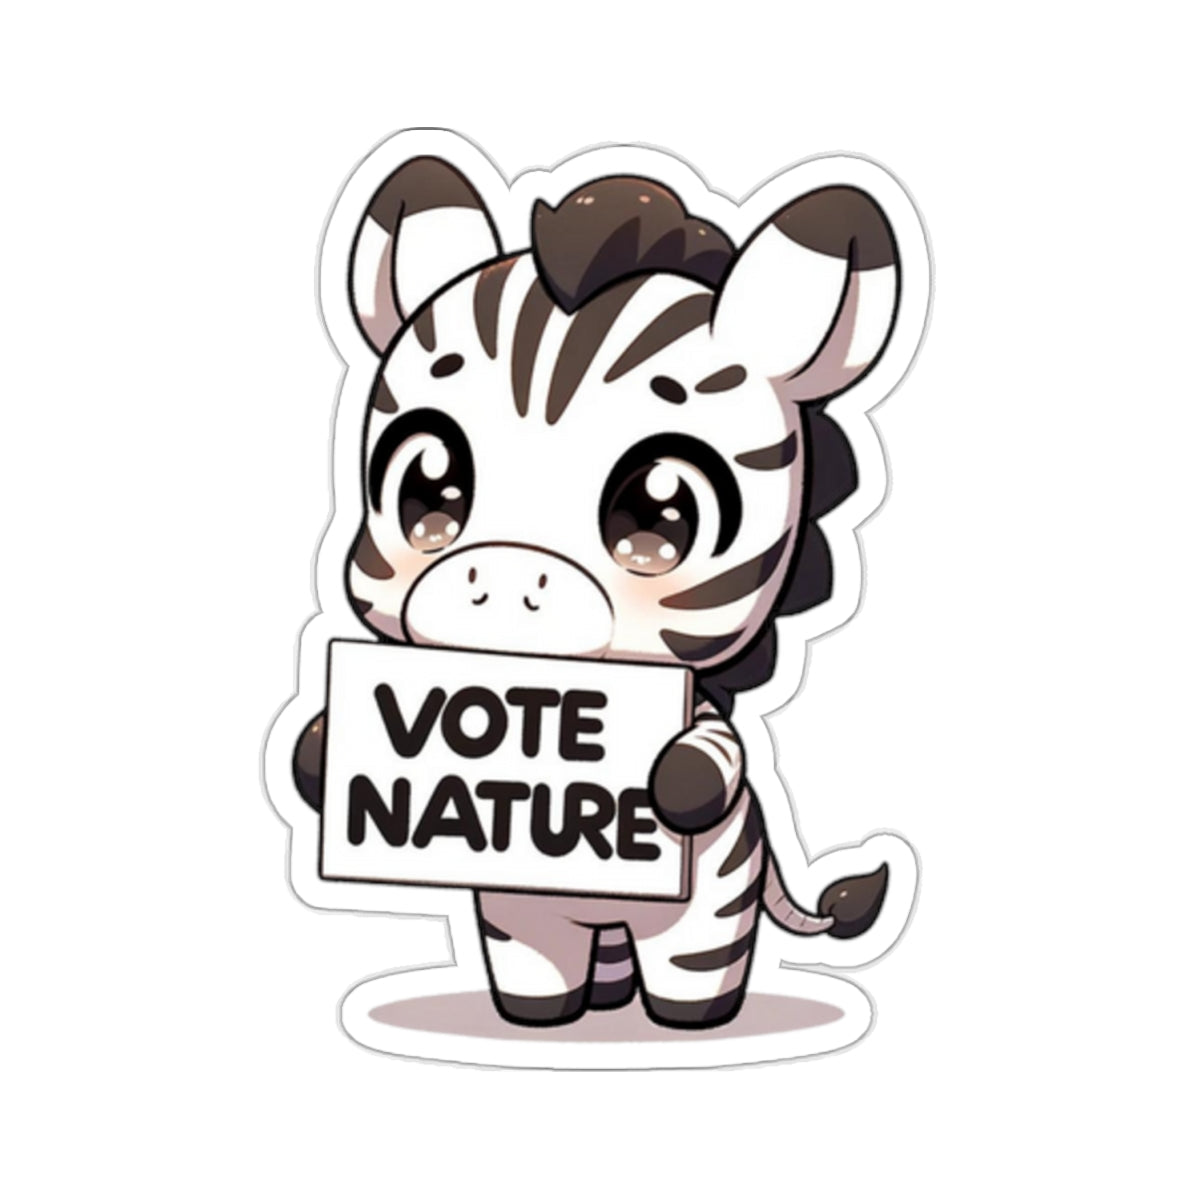 Inspirational Cute Zebra Statement vinyl Sticker: Vote Nature! for laptop, kindle, phone, ipad, instrument case, notebook, mood board